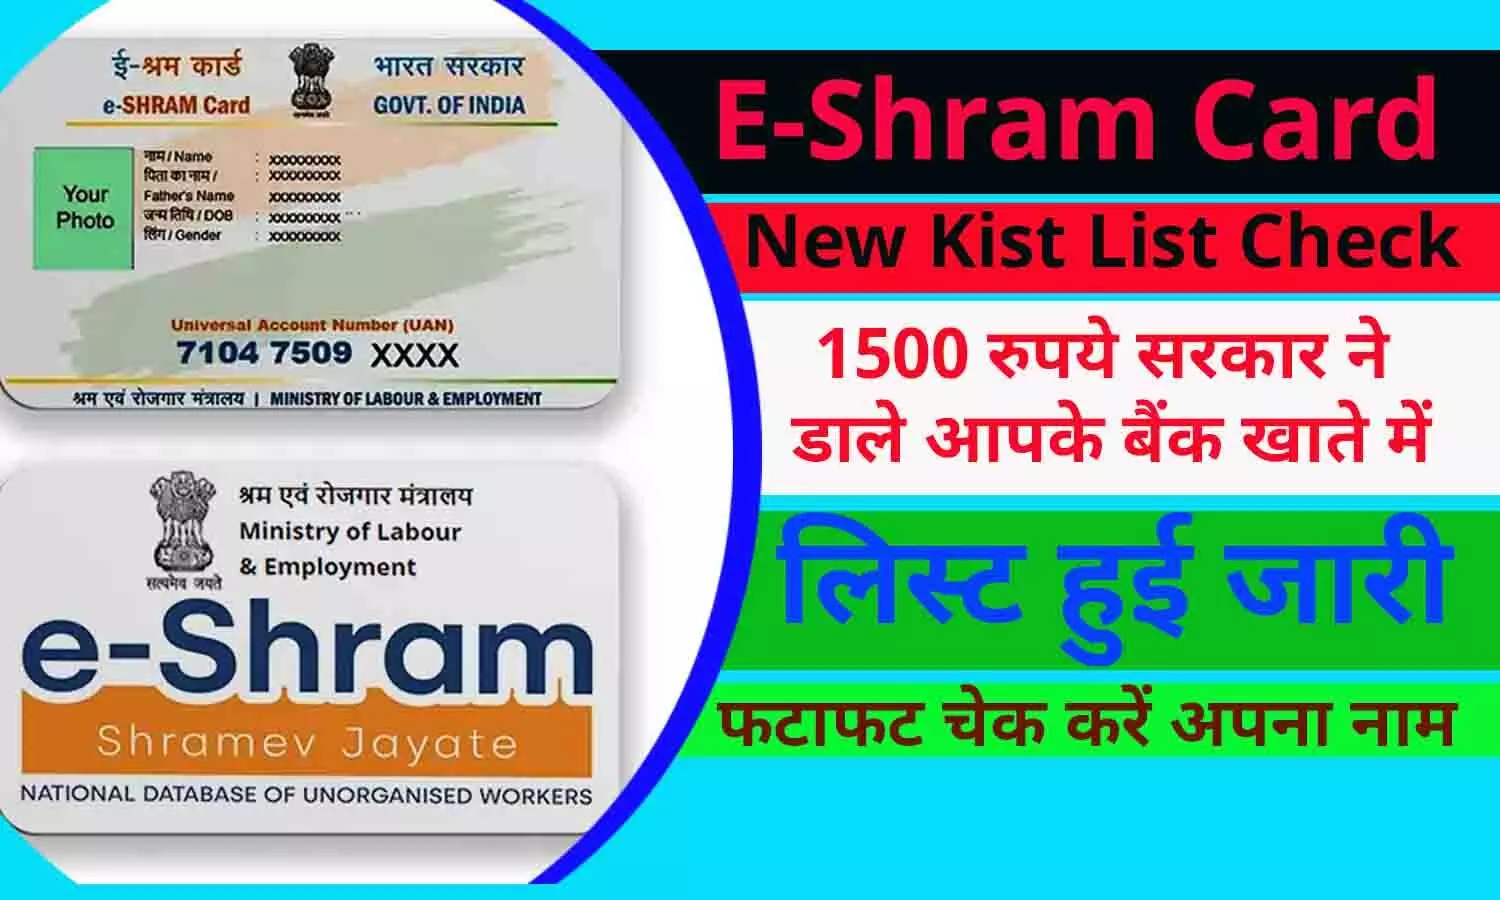 E-Shram Card New Kist List Check